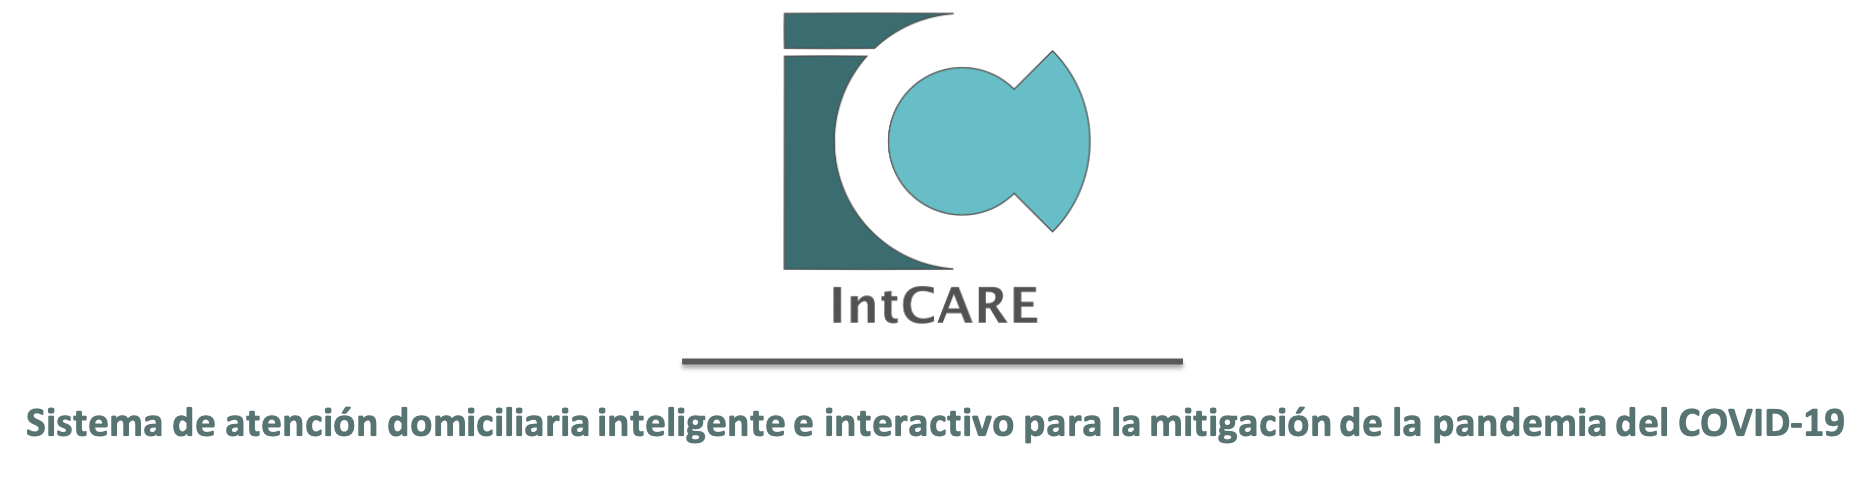 IntCARE-CM